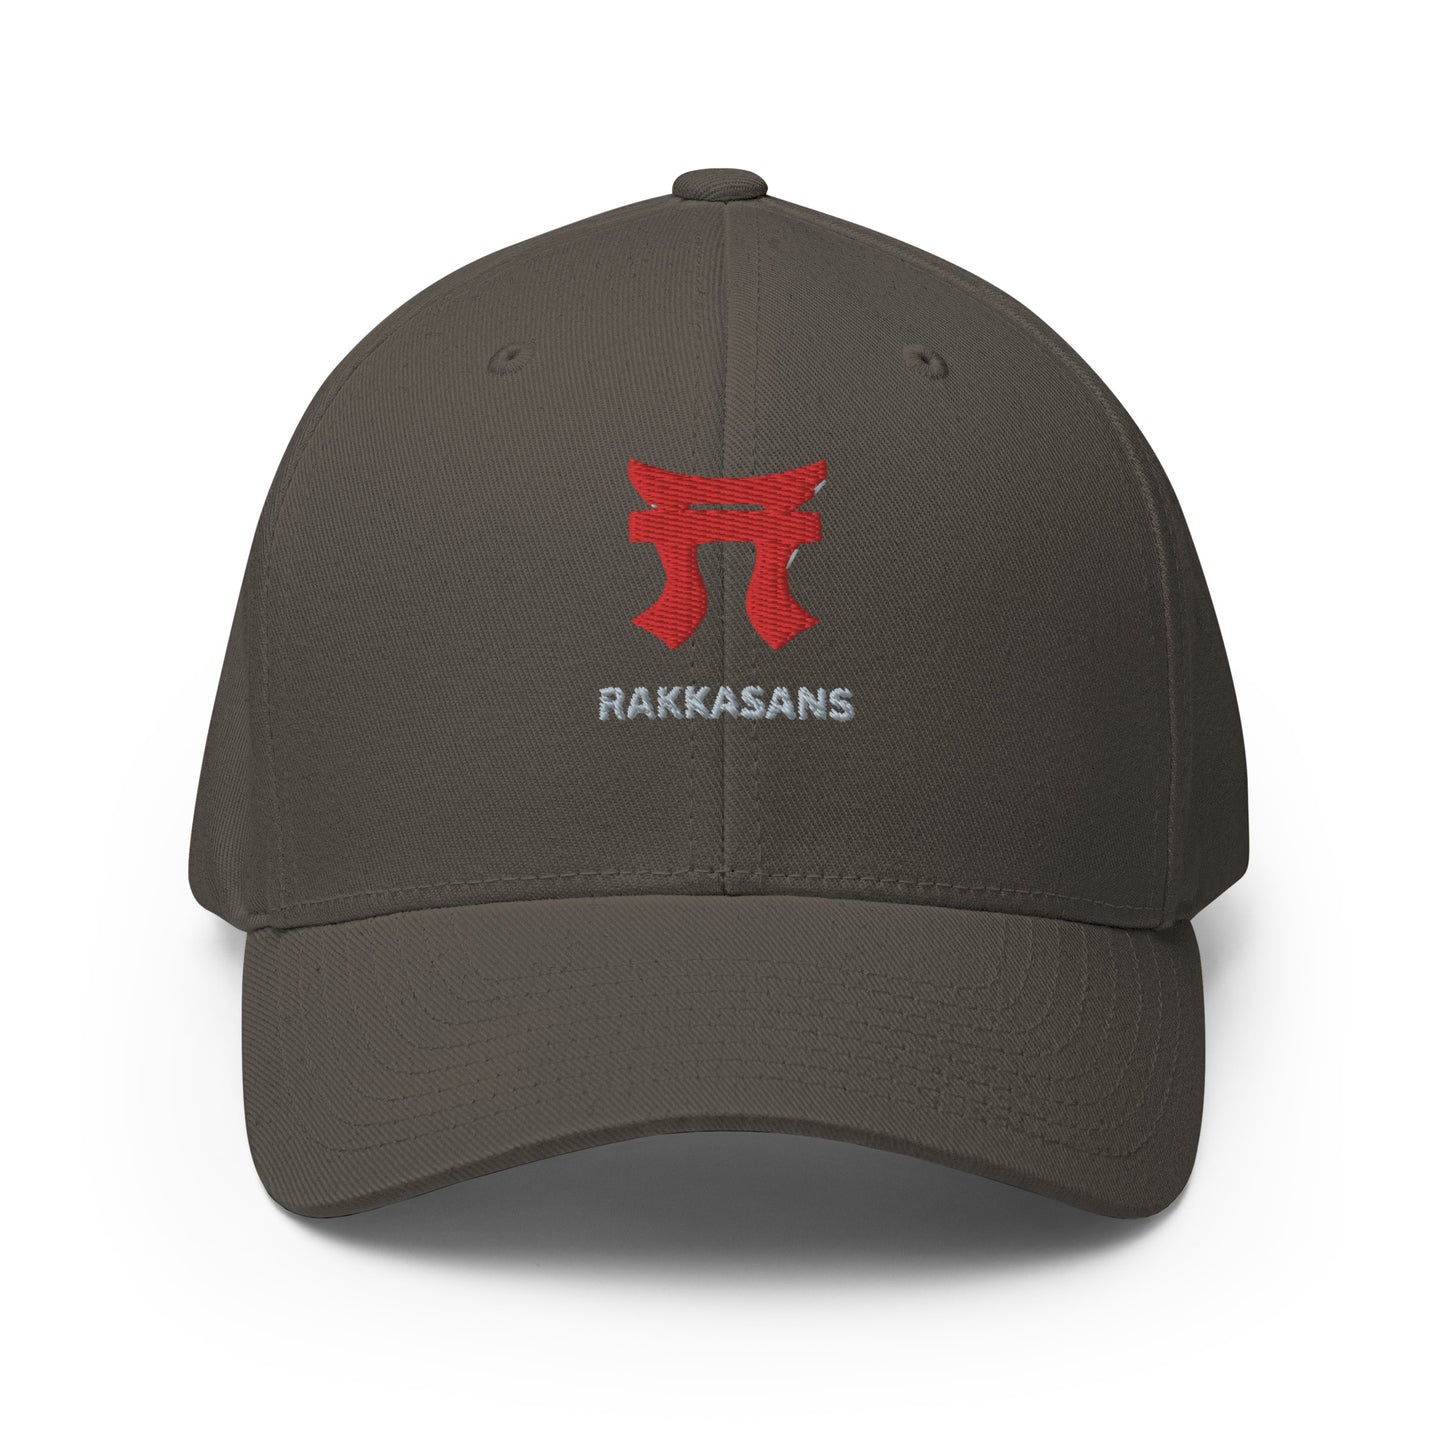 Rakkgear "Rakkasans" Grey Embroidered Fitted Baseball Cap: Multicam black cap with iconic Rakkasans Logo embroidery on the